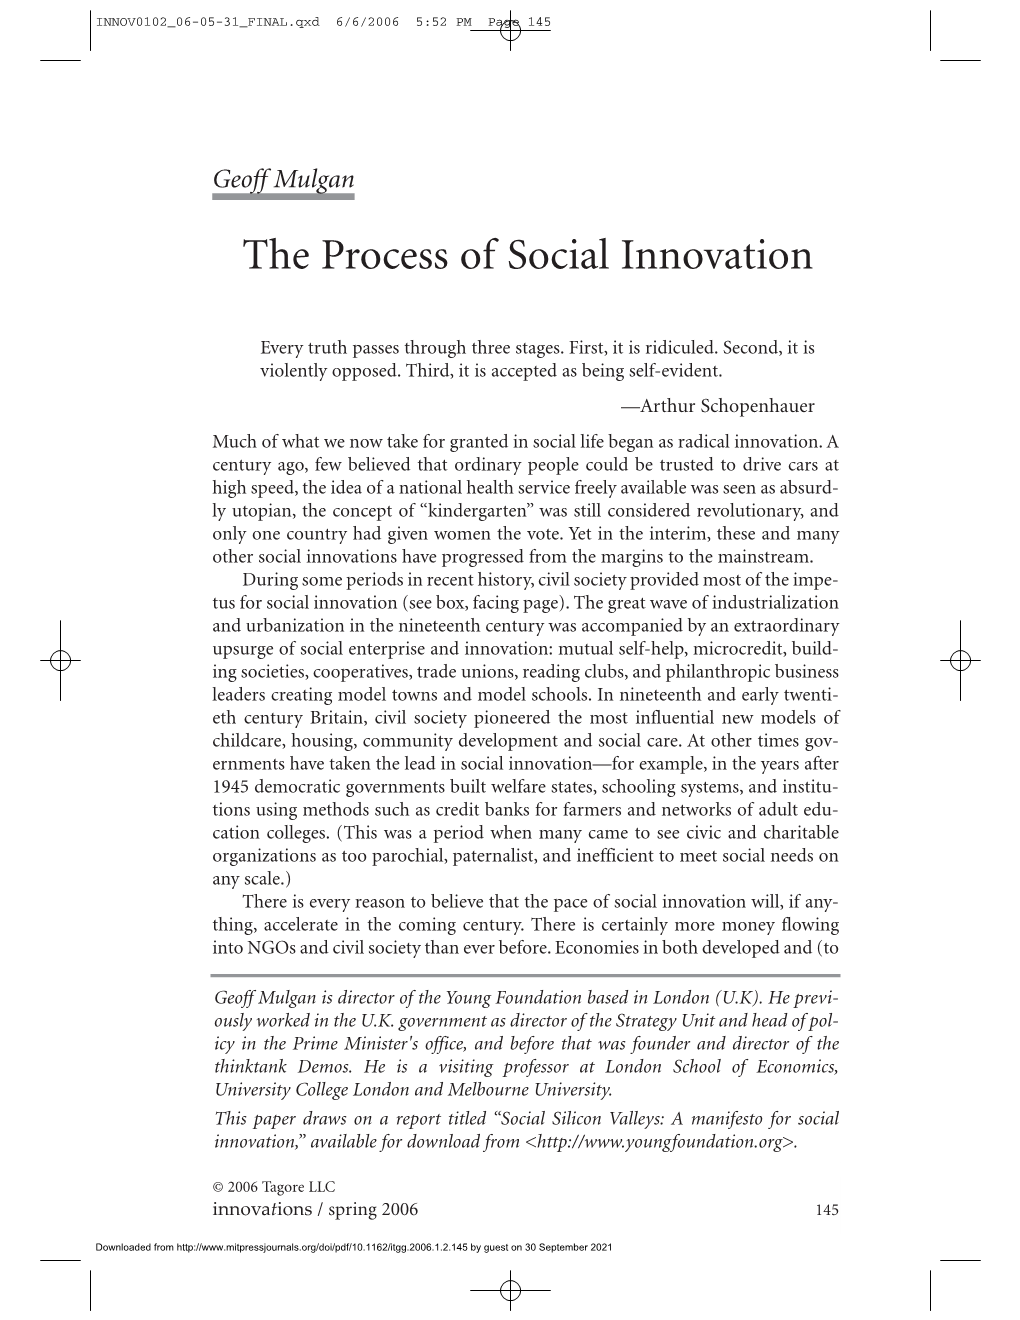 Geoff Mulgan the Process of Social Innovation